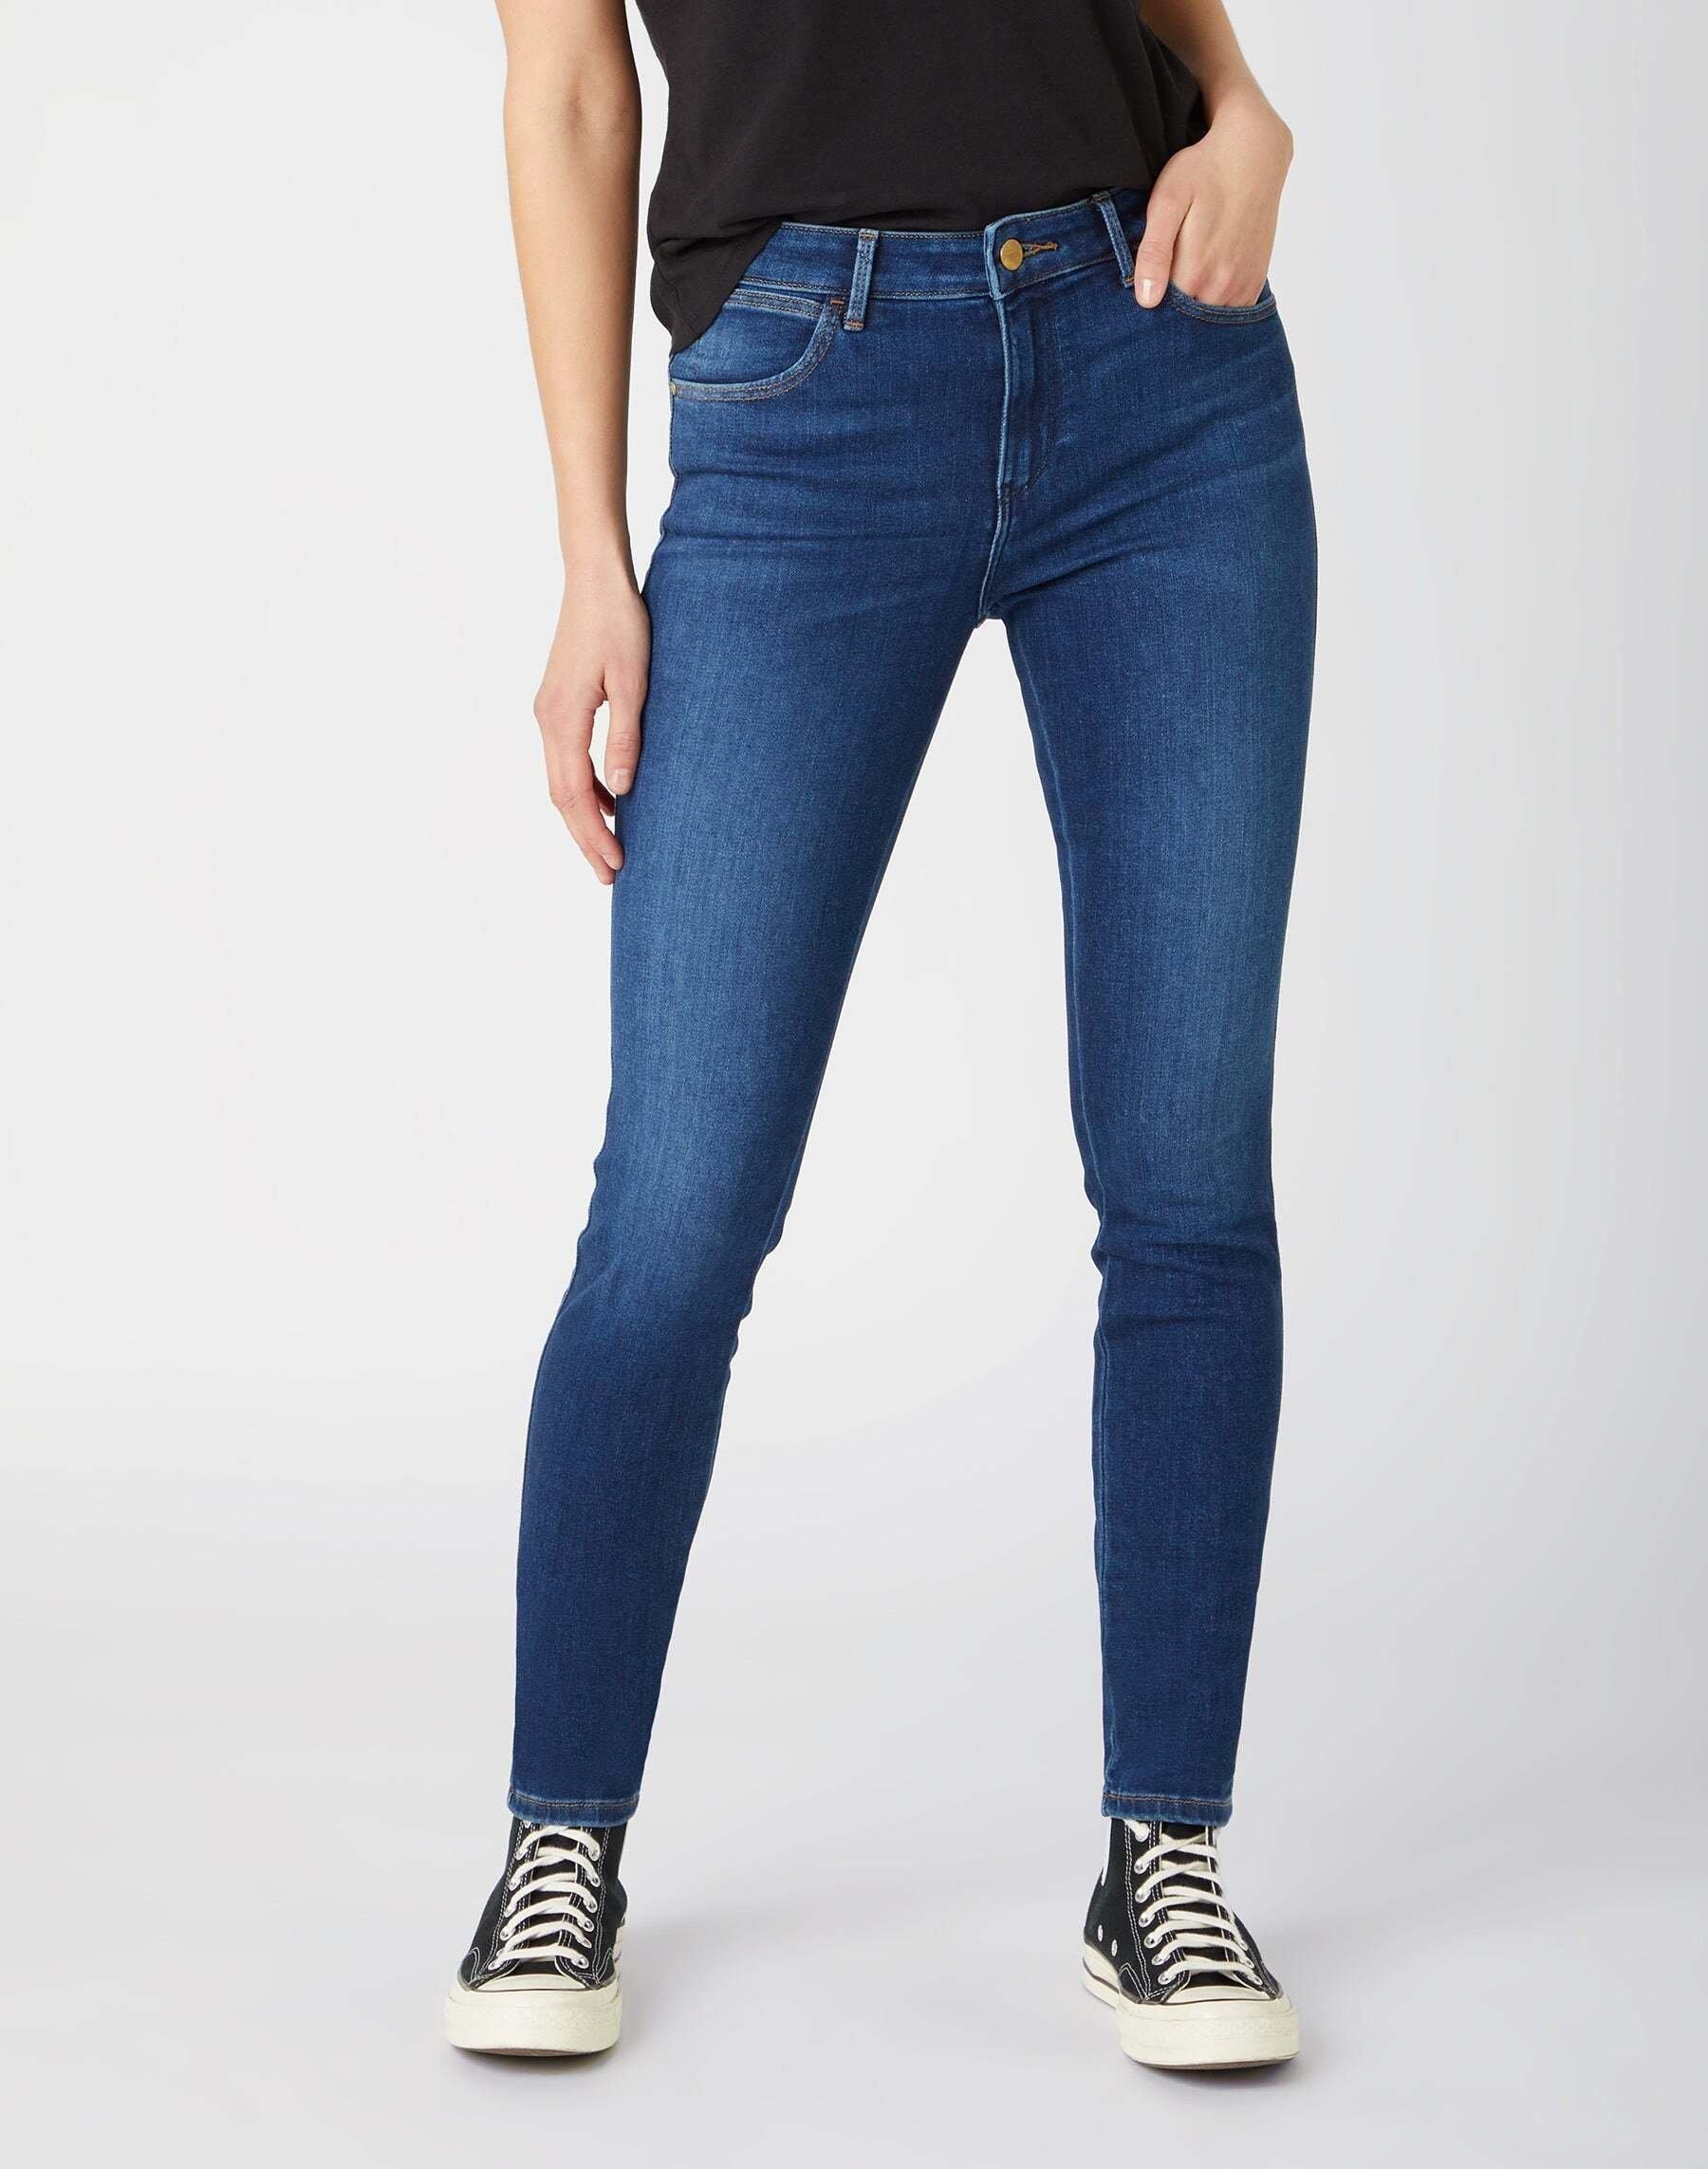 Jeans Skinny Fit Skinny Damen Blau Denim L34/W27 von Wrangler